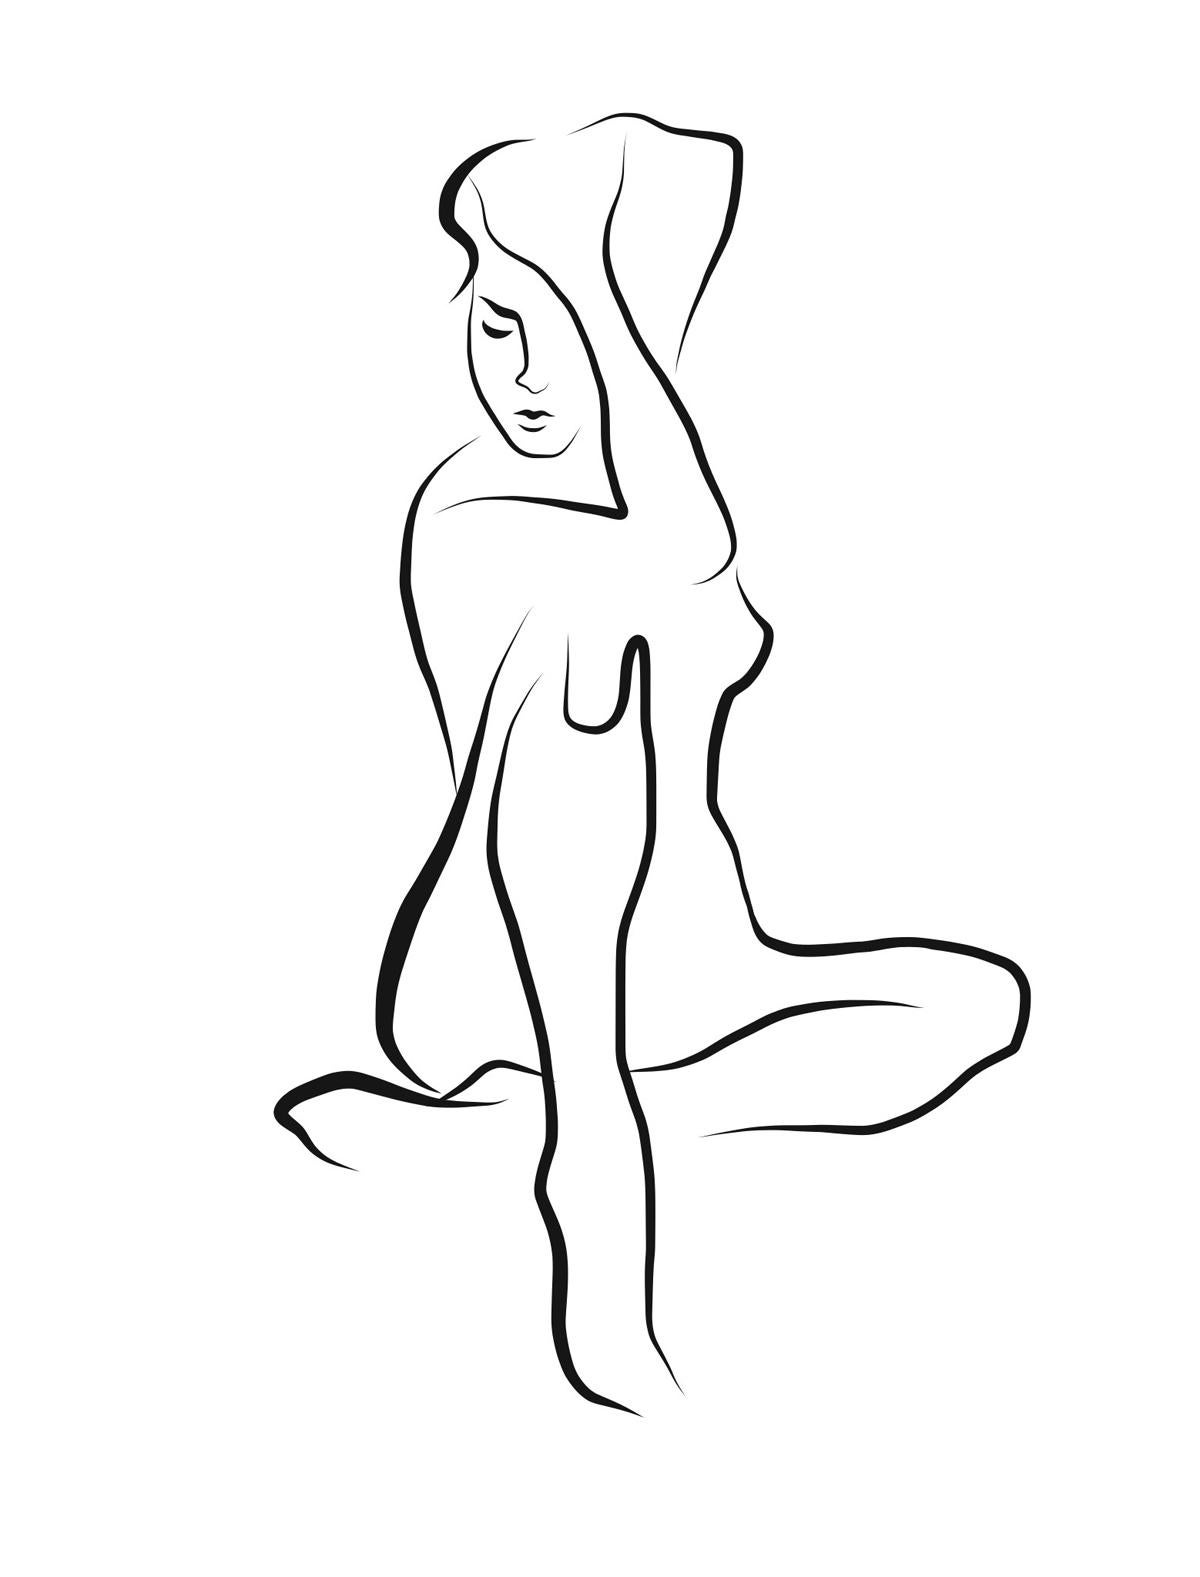 Haiku #41 - Digital Vector Drawing Sitting Female Nude Woman Figure Deep Thought - Art by Michael Binkley